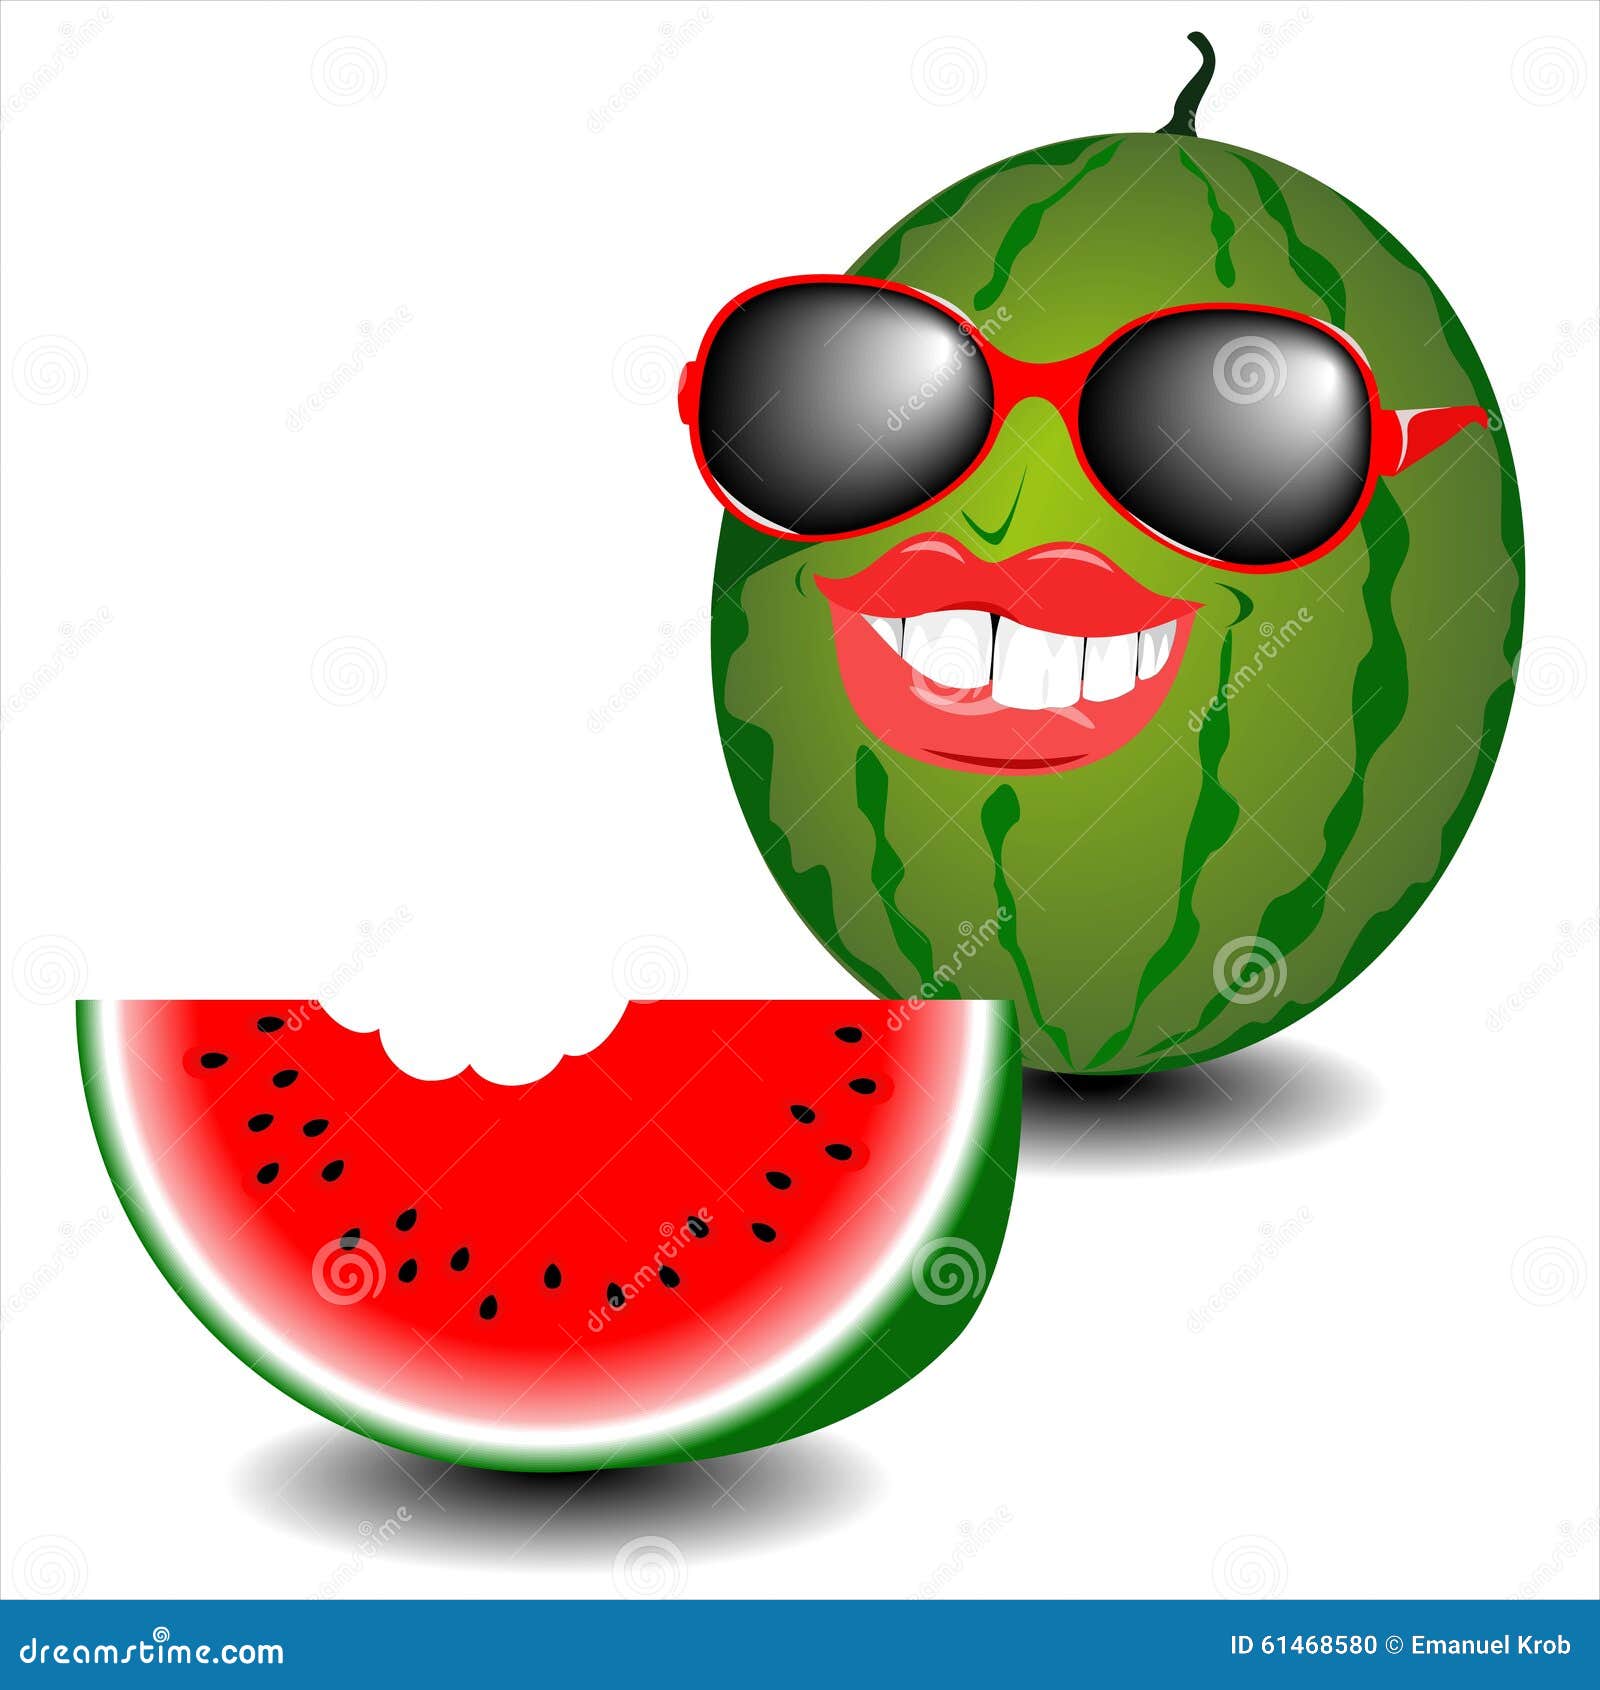 Melon Face Sunglasses Stock Illustrations - 75 Melon Face Sunglasses Stock ...